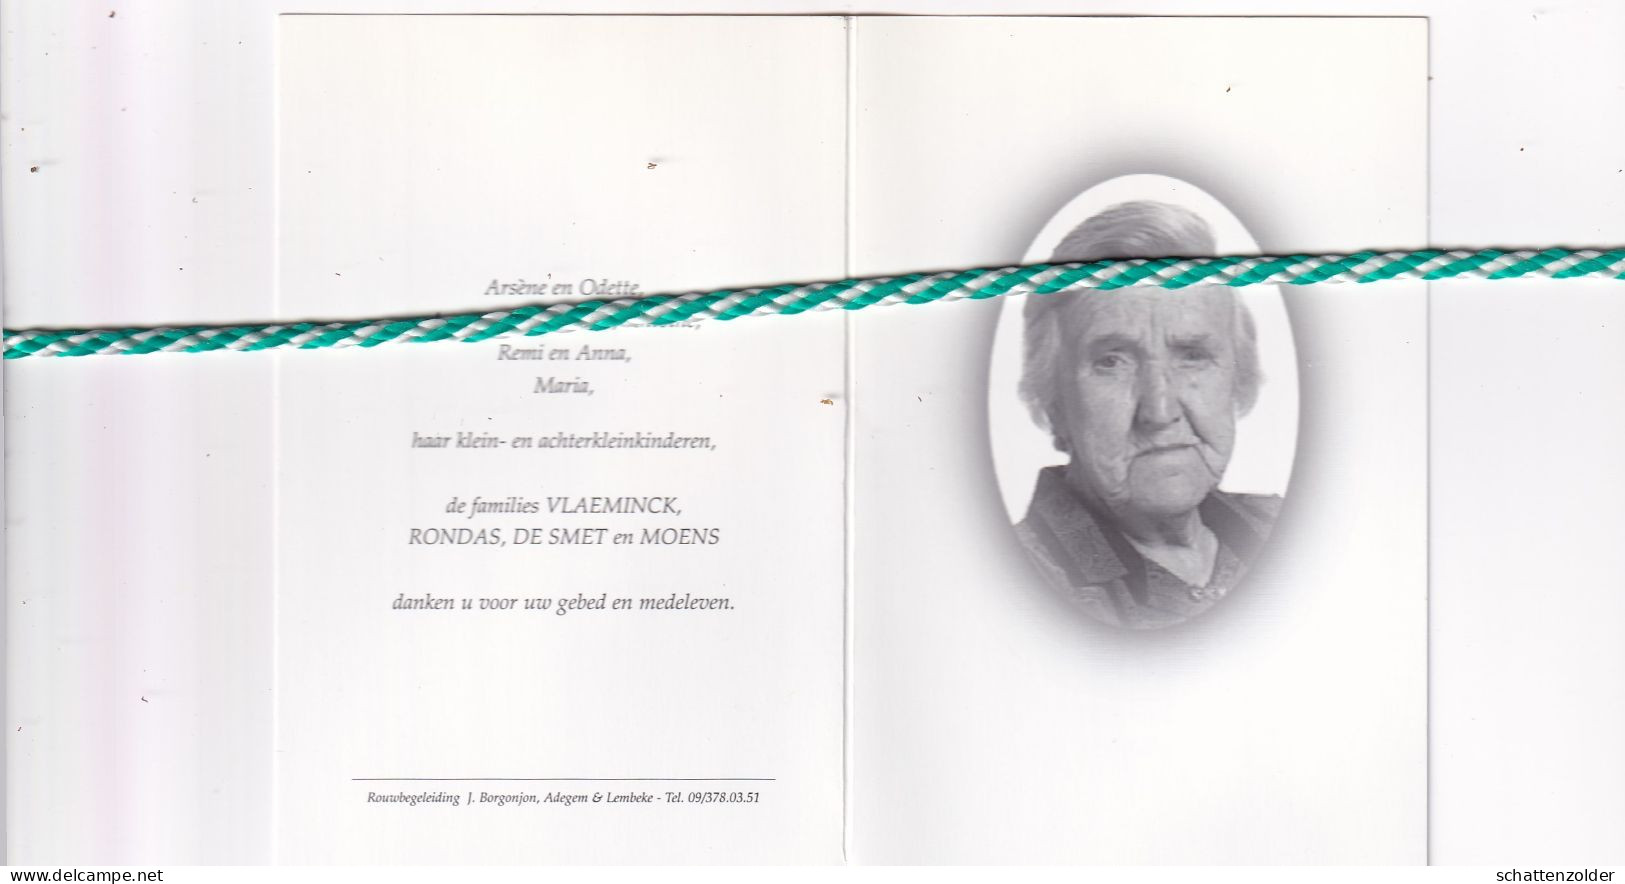 Zulma Vlaeminck-Rondas, Lembeke 1904, 2000. Foto - Obituary Notices